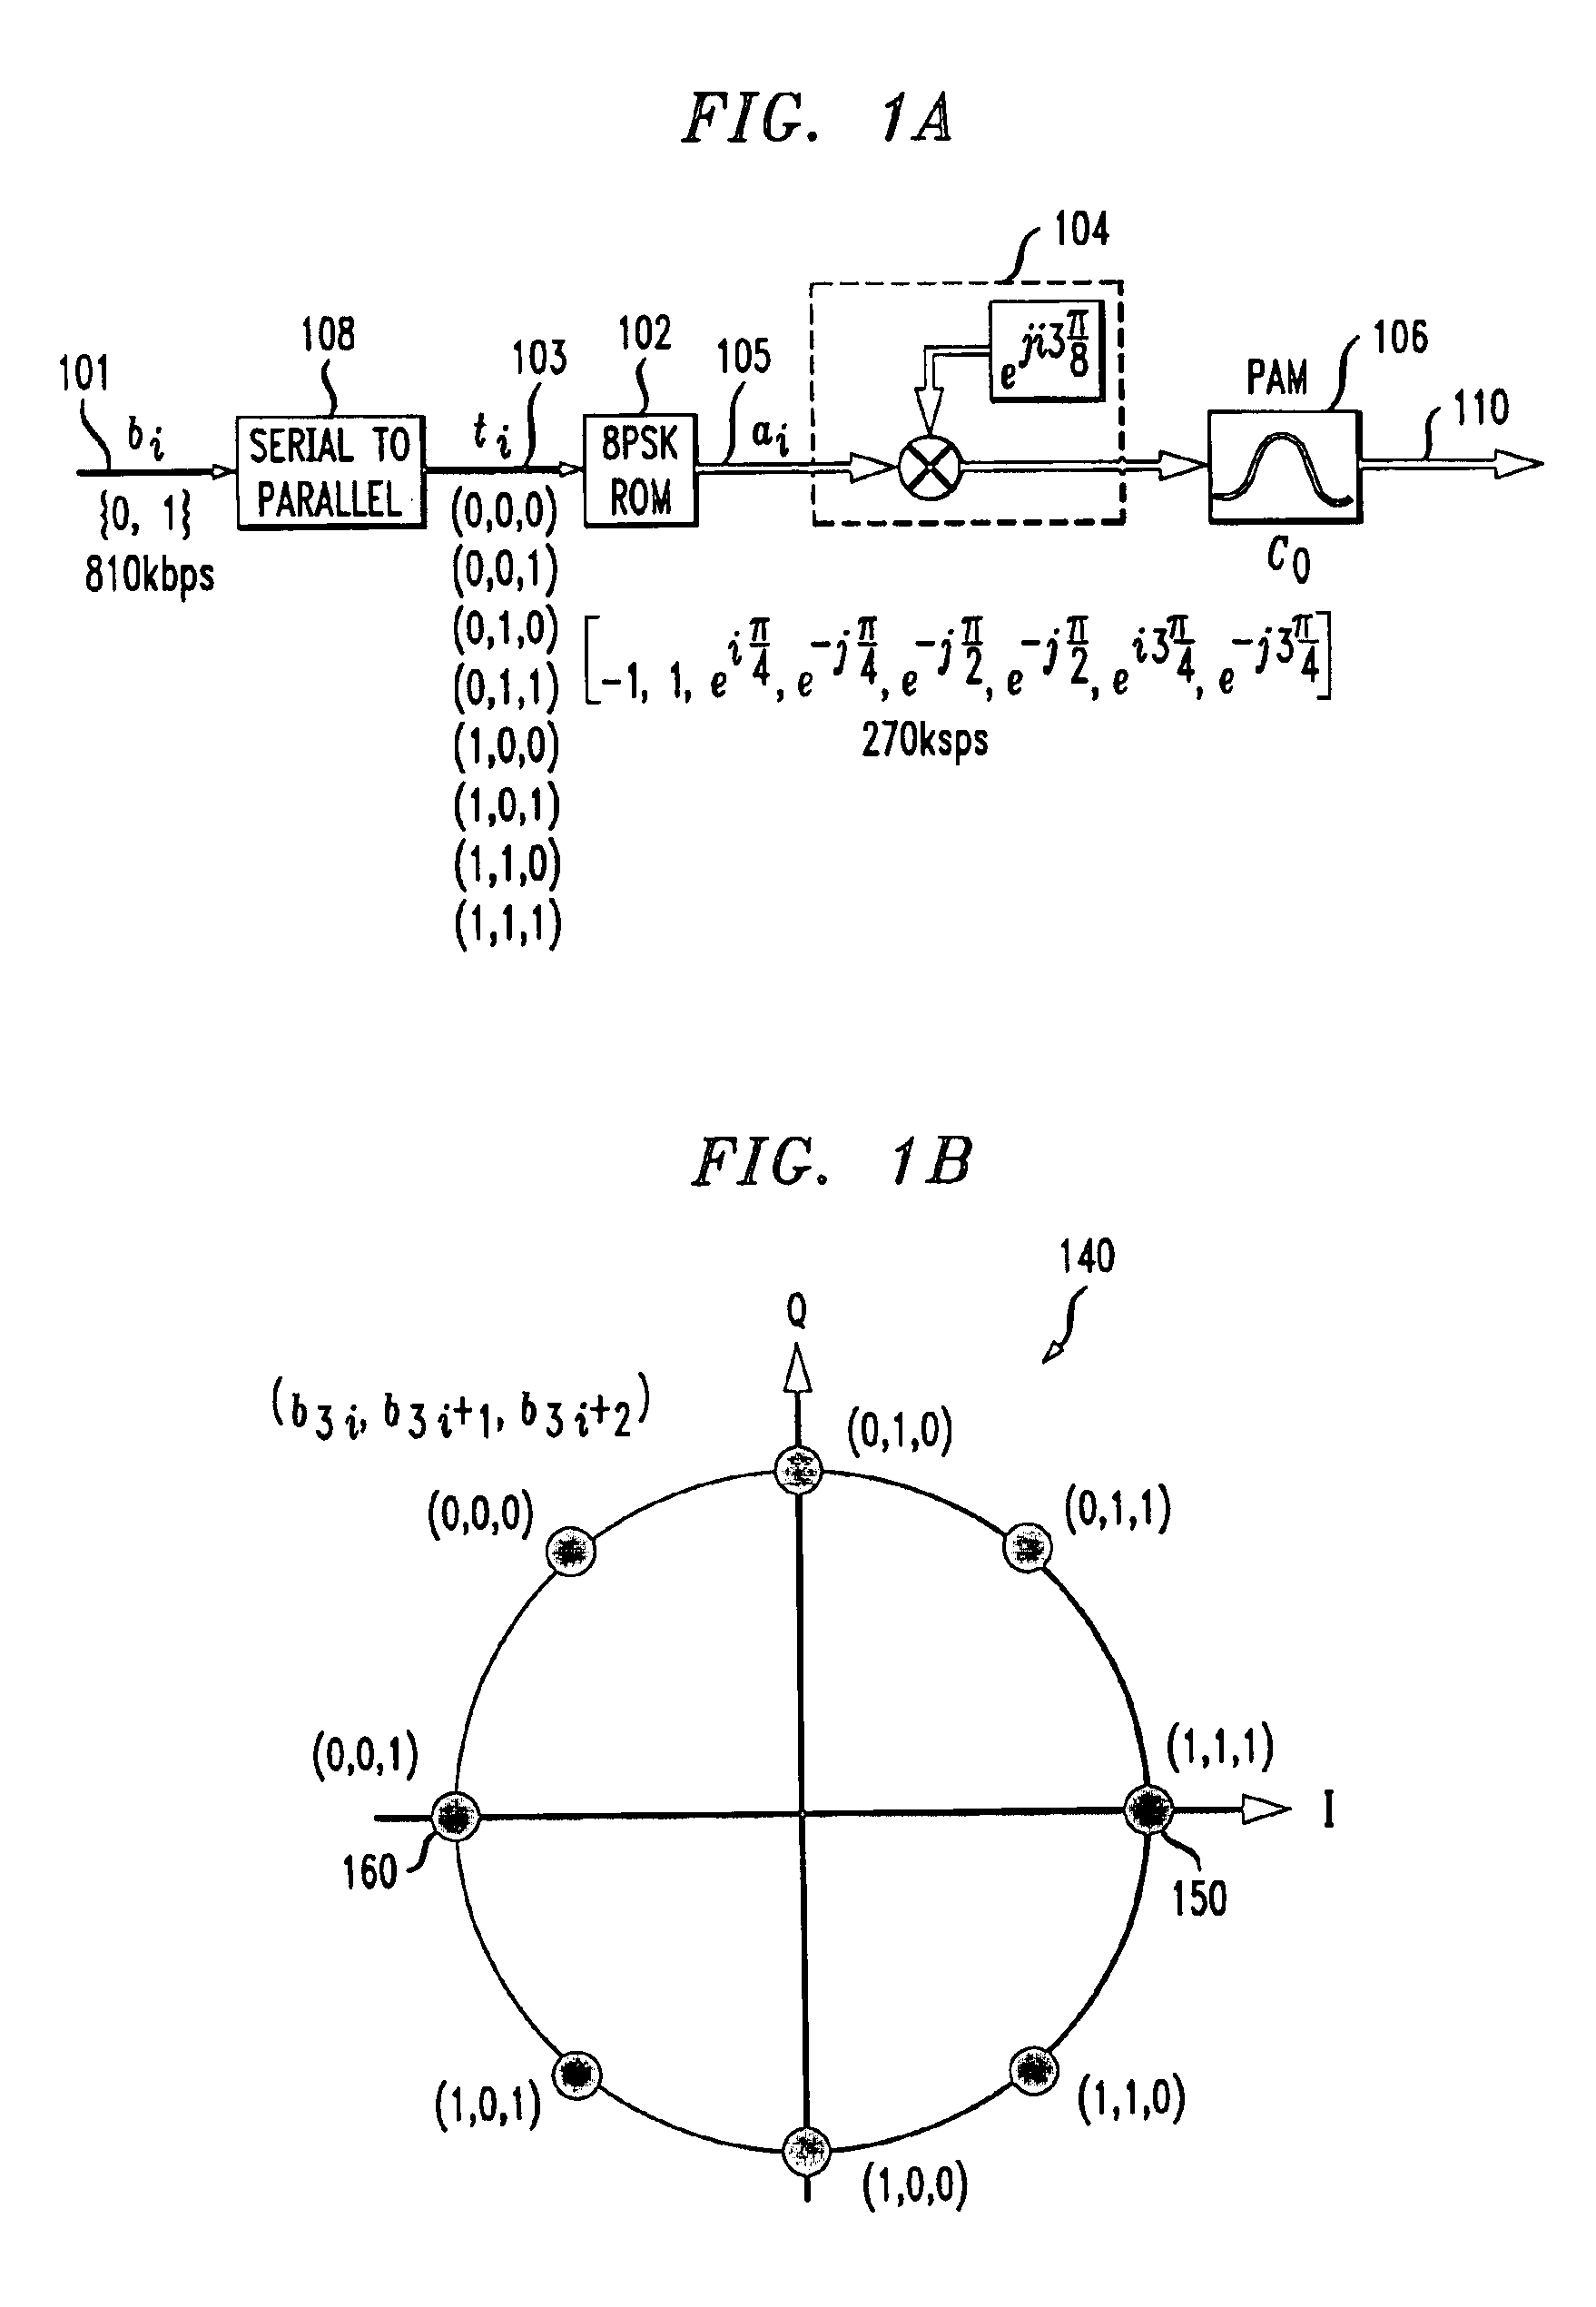 Multi-protocol modulator